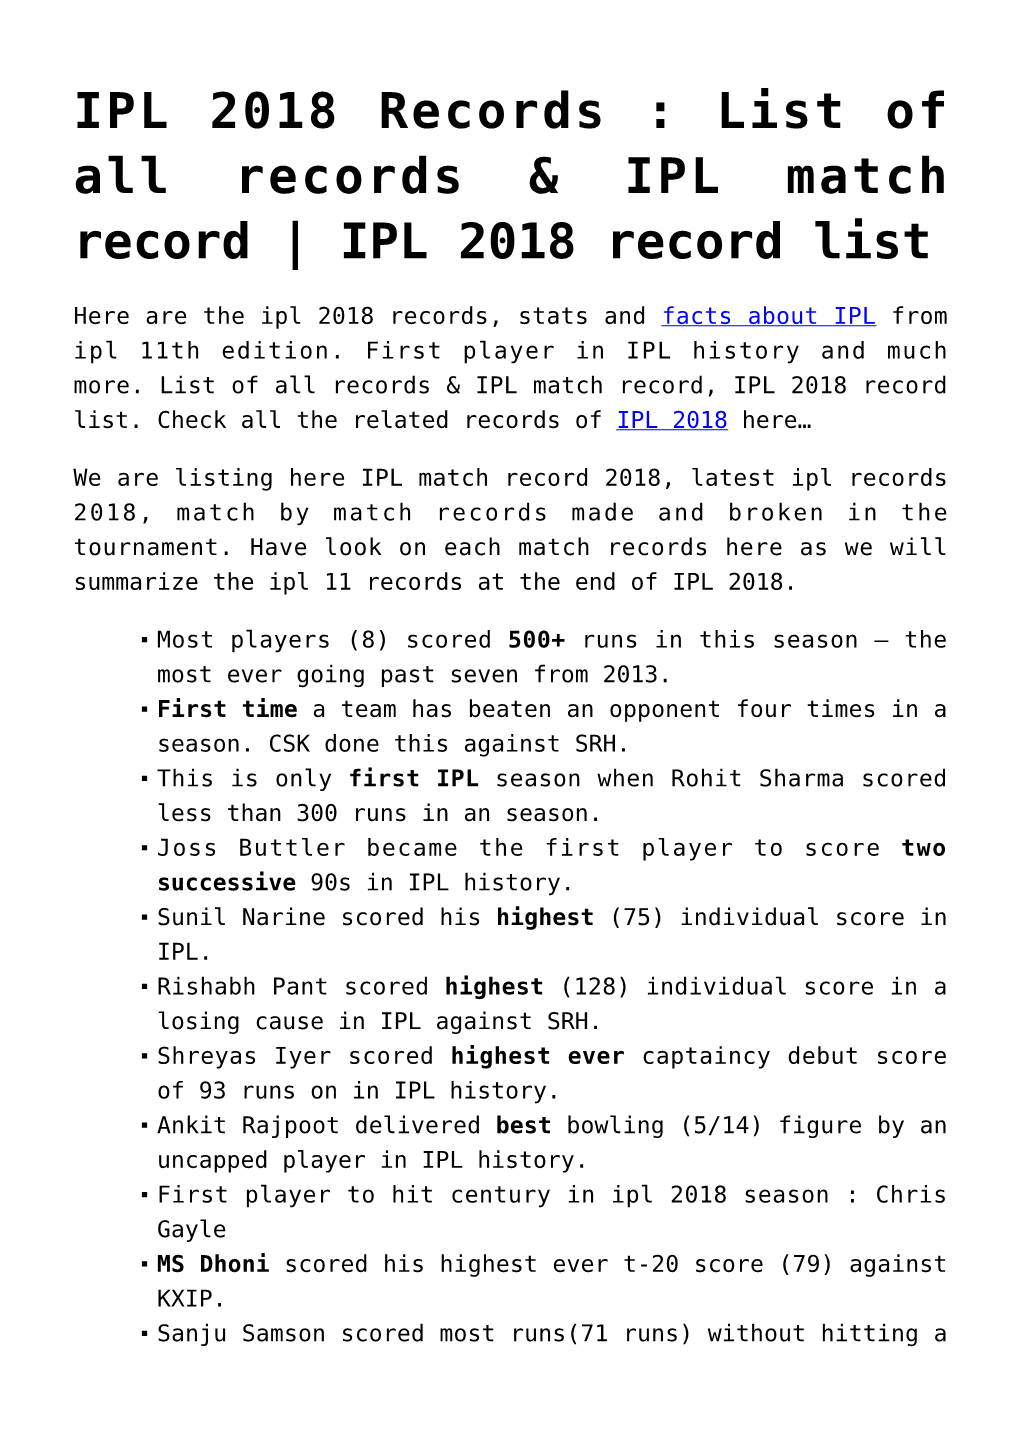 IPL 2018 Records : List of All Records & IPL Match Record | IPL 2018 Record List